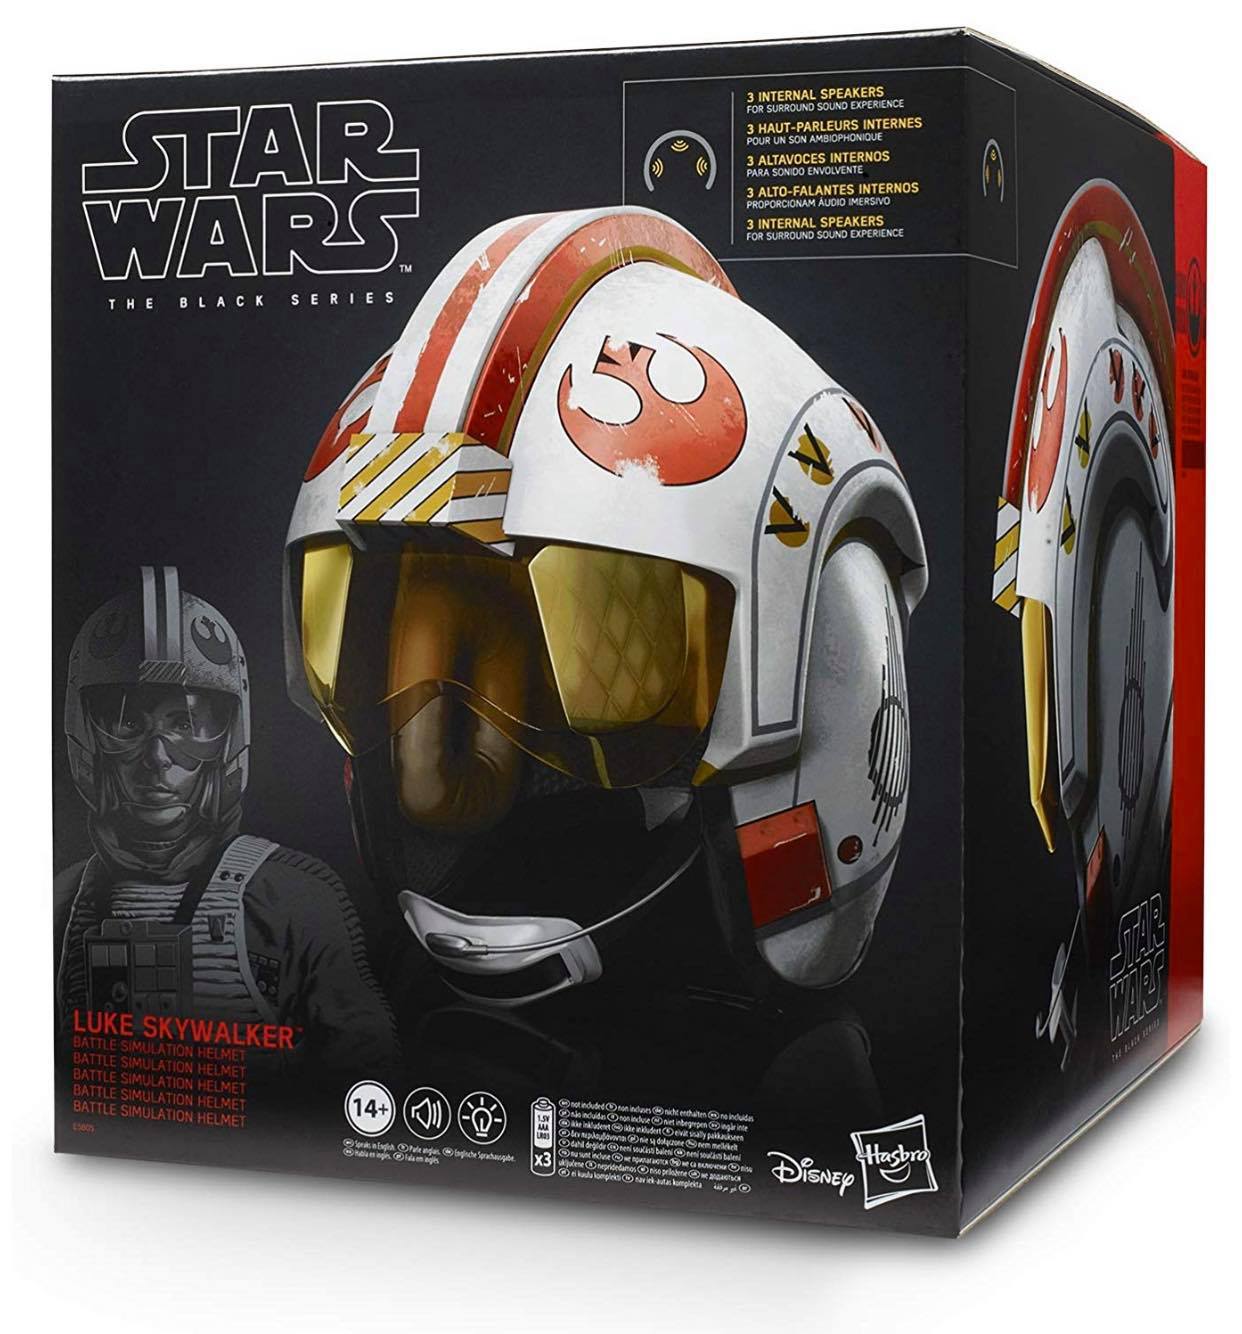 Deal! Black Series Luke Skywalker Electronic X-Wing Pilot Helmet is on sale on amazon via coupon option!